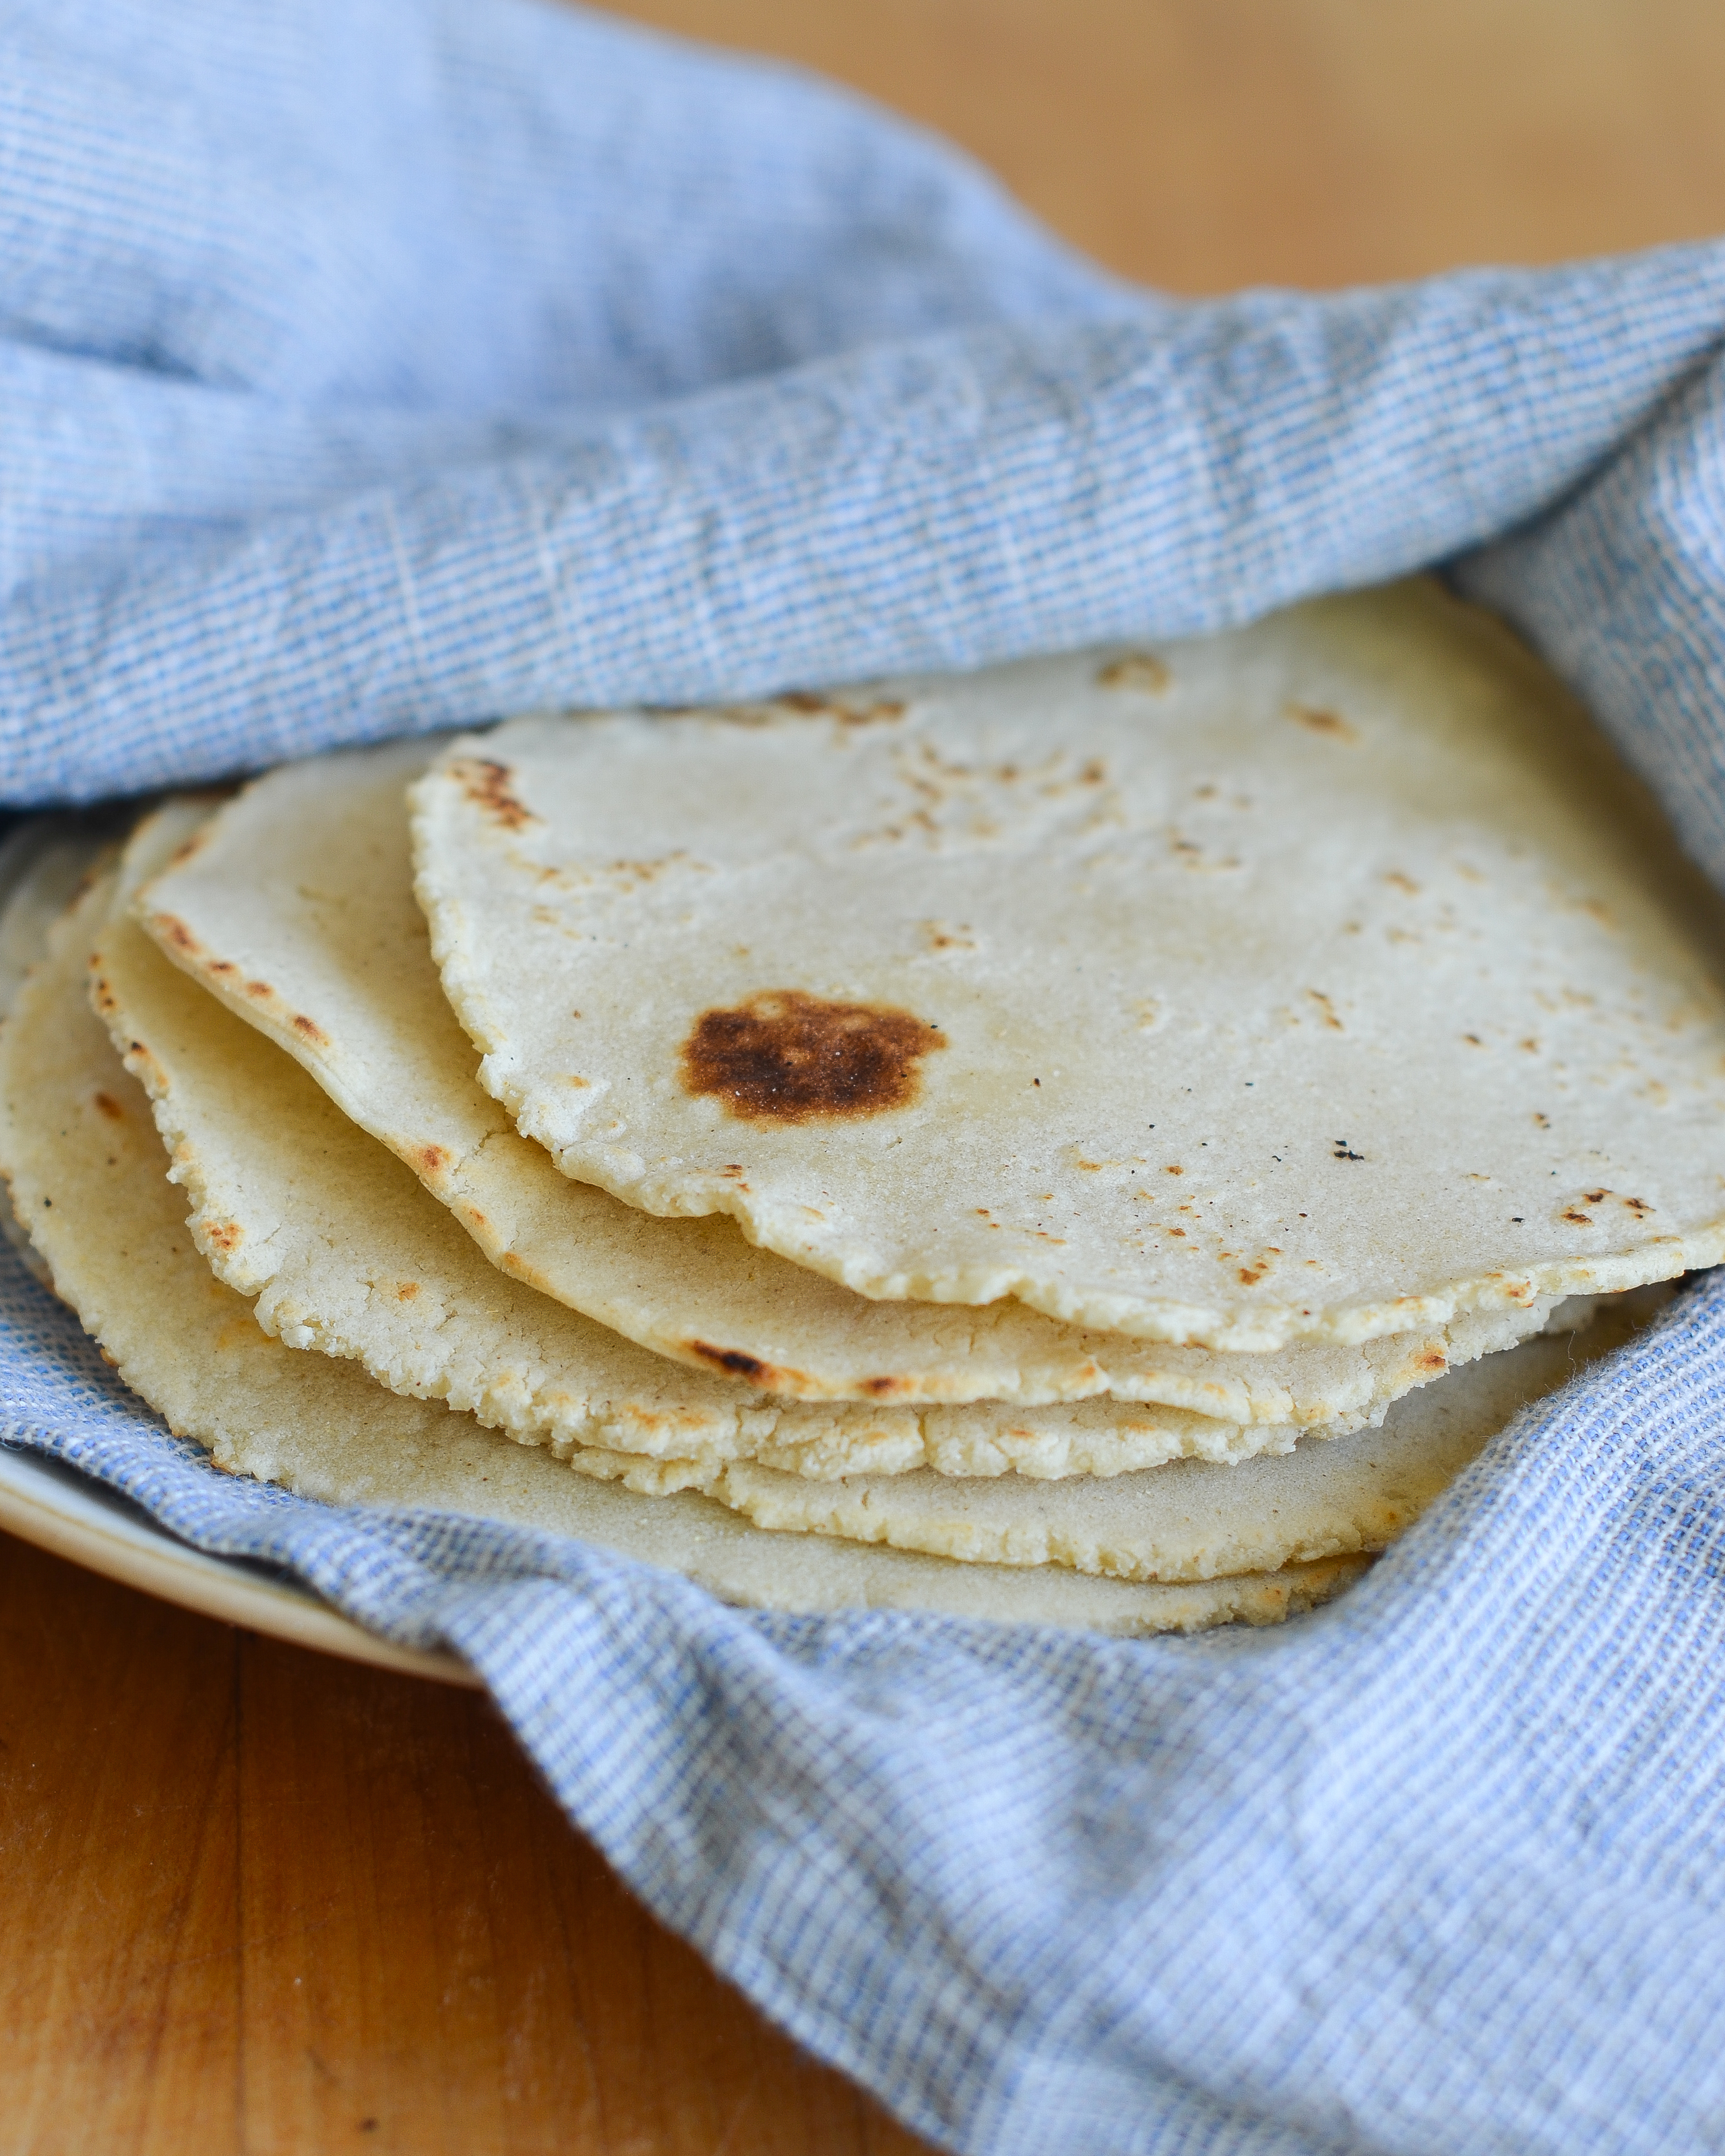 Homemade Tortillas Recipe: How to Make It